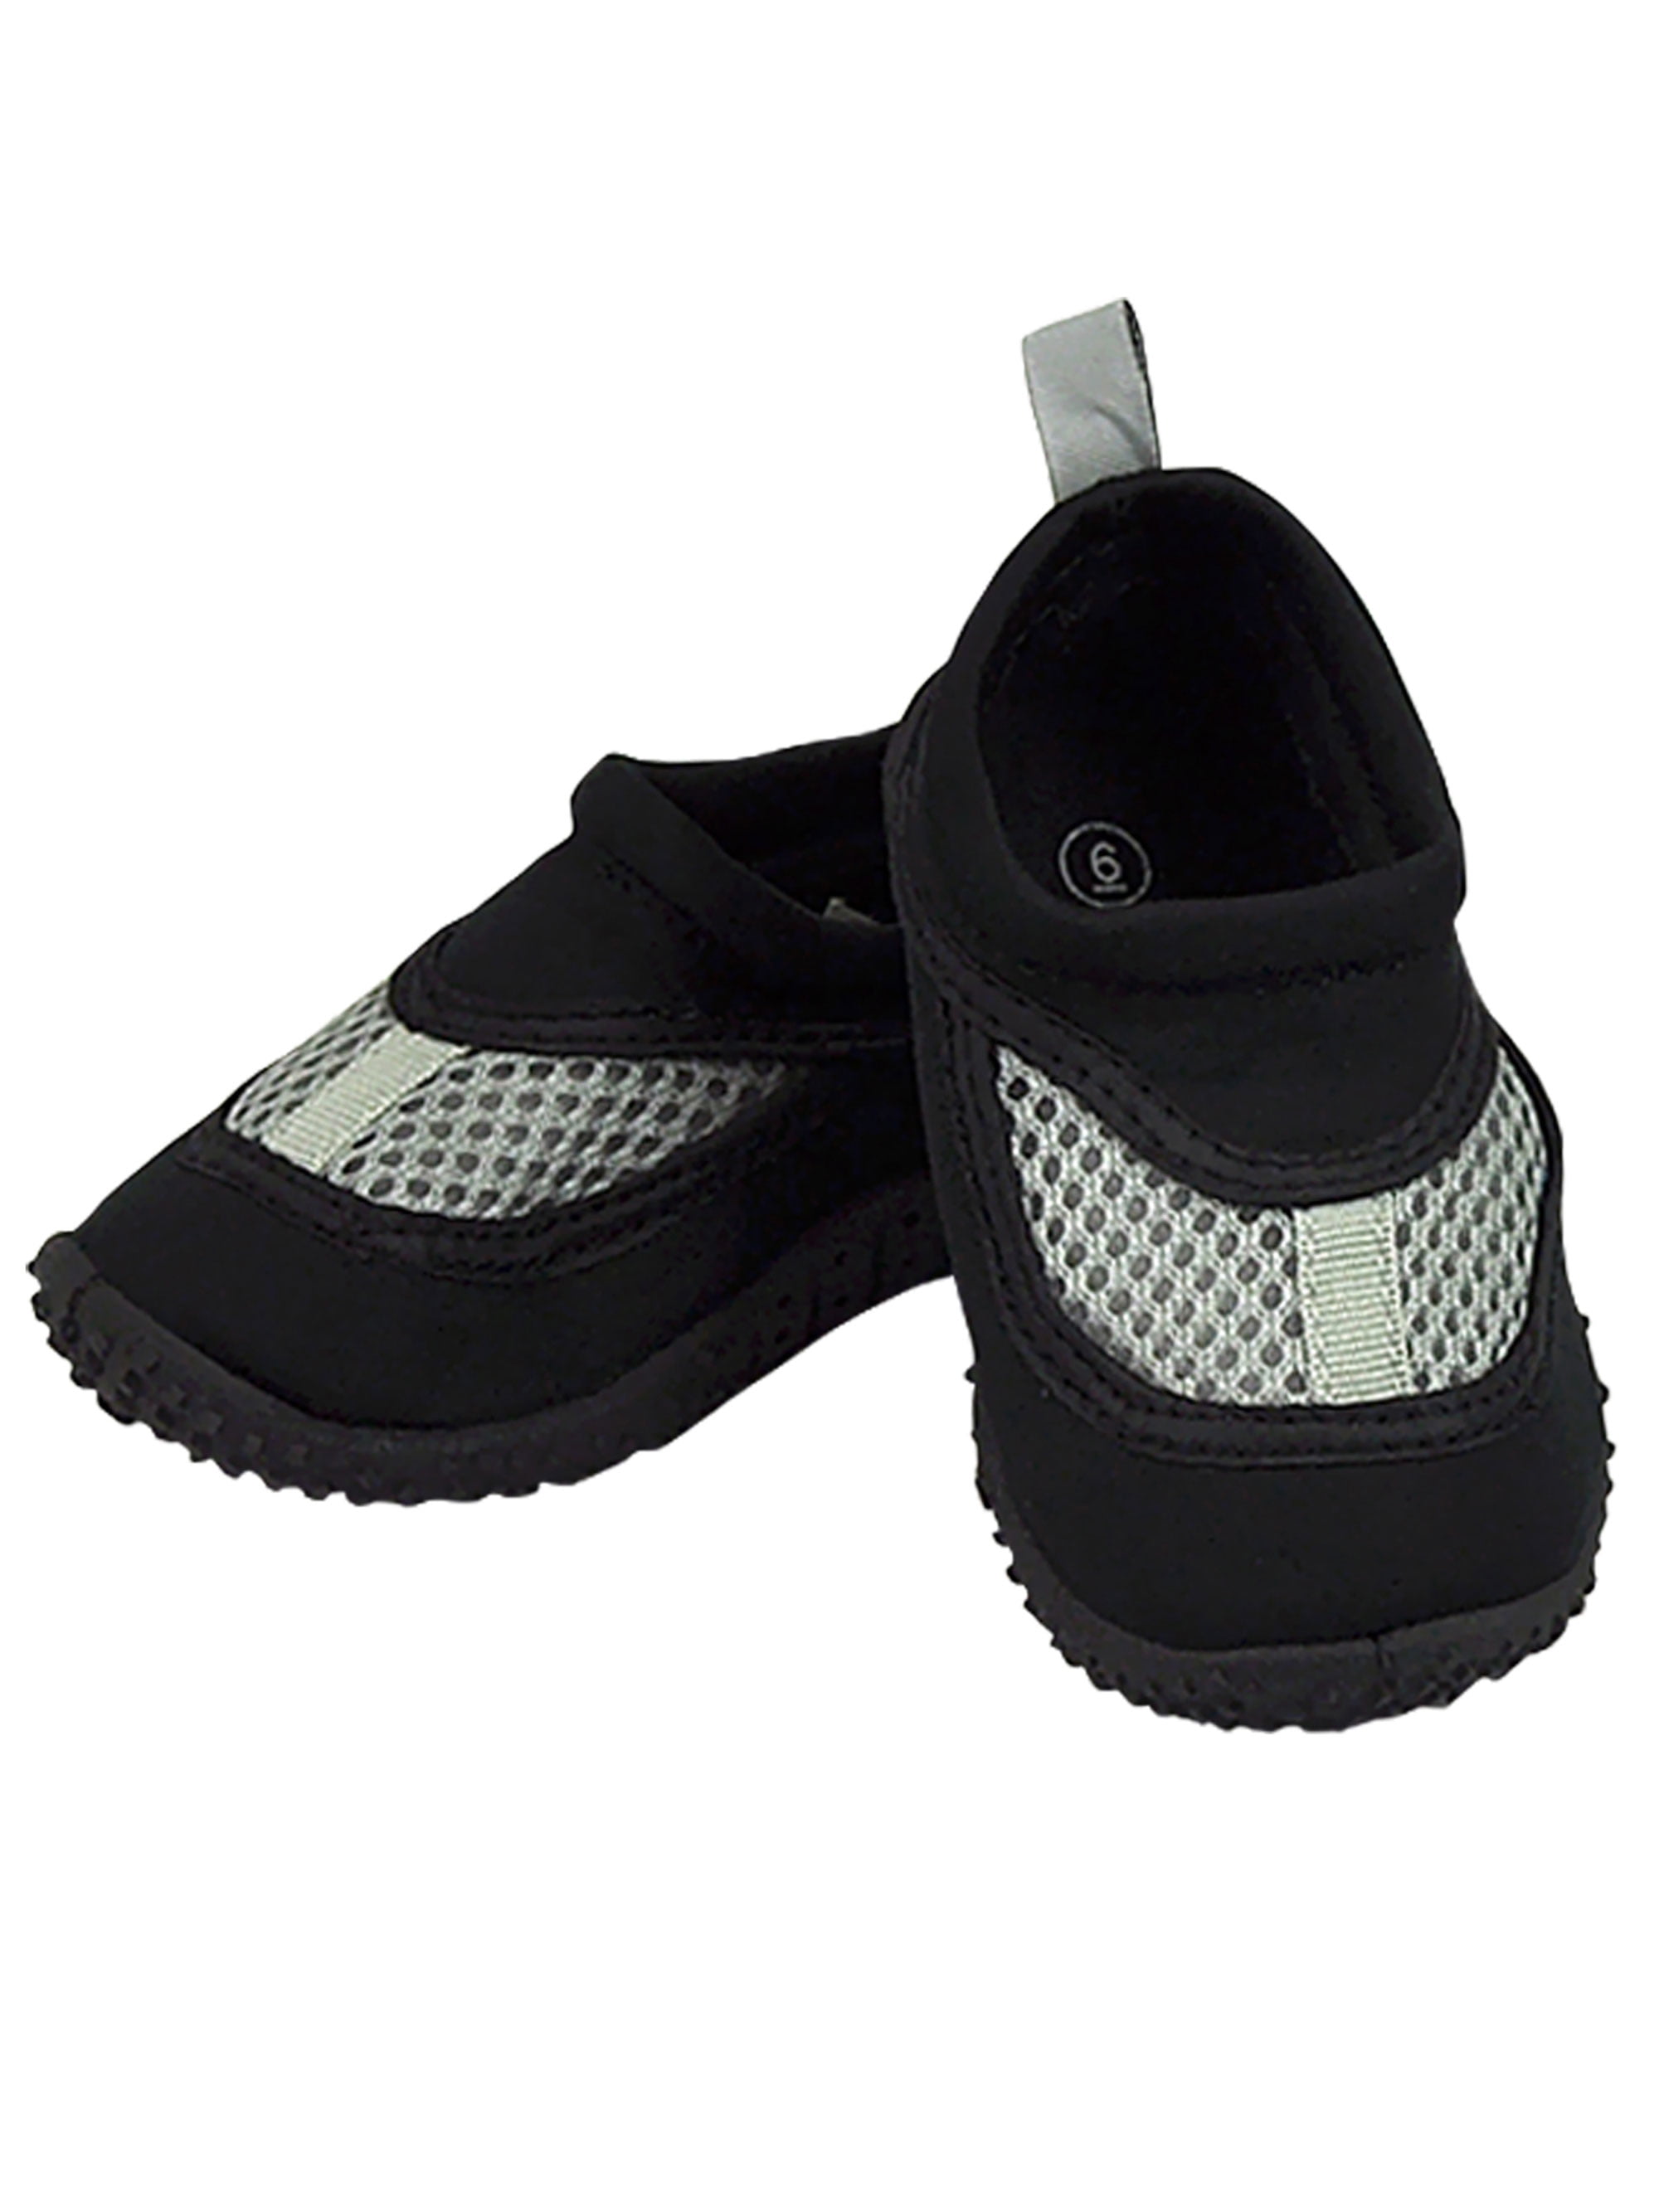 Iplay Unisex Boys or Girls Sand and Water Swim Shoes Kids Aqua Socks ...